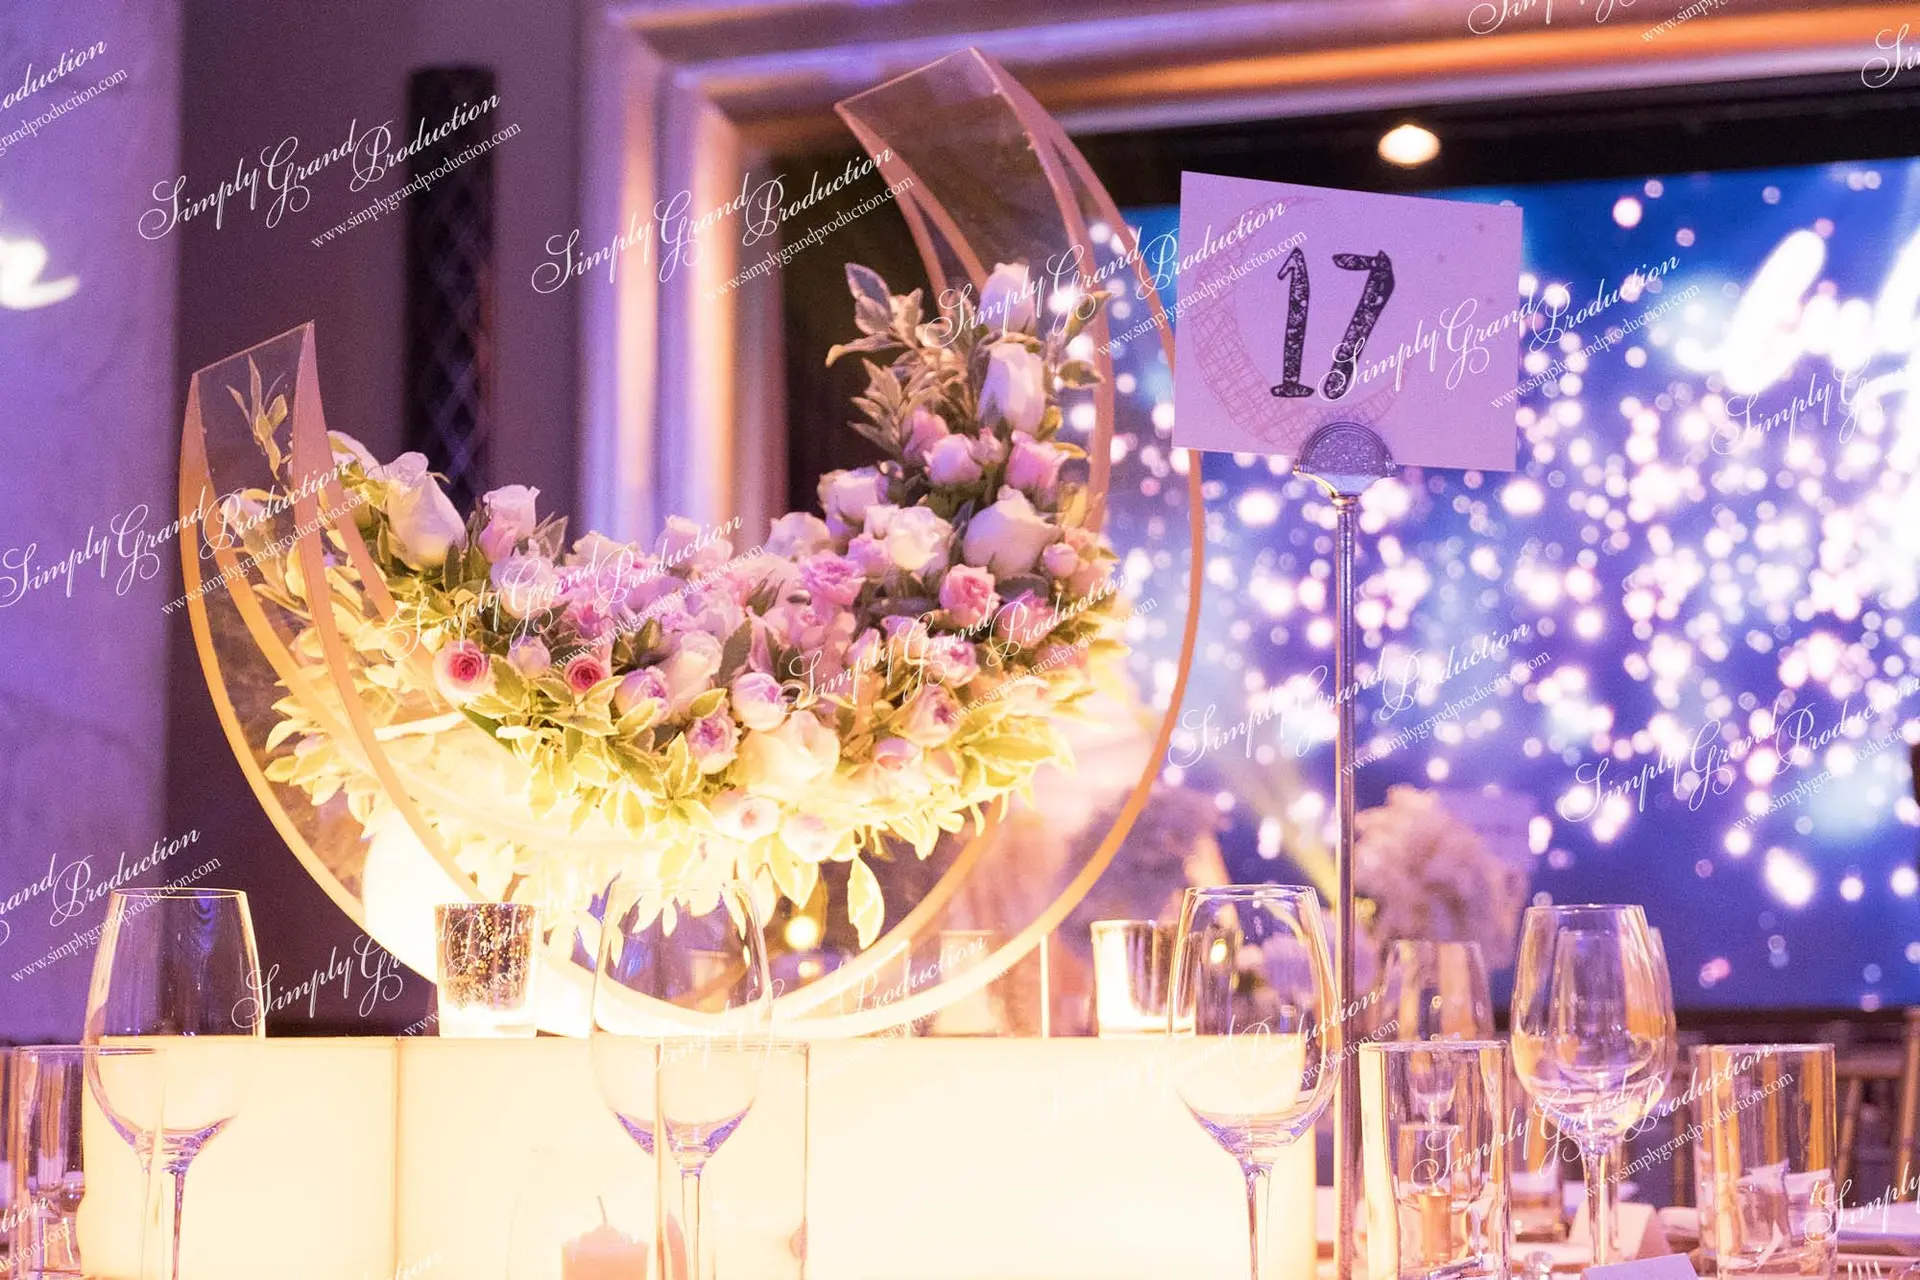 Simply_Grand_Production_Ballroom_wedding_decoration_banquet_centerpiece_moon_gold_rim_whimsical_Grand_Hyatt_3_1_wm